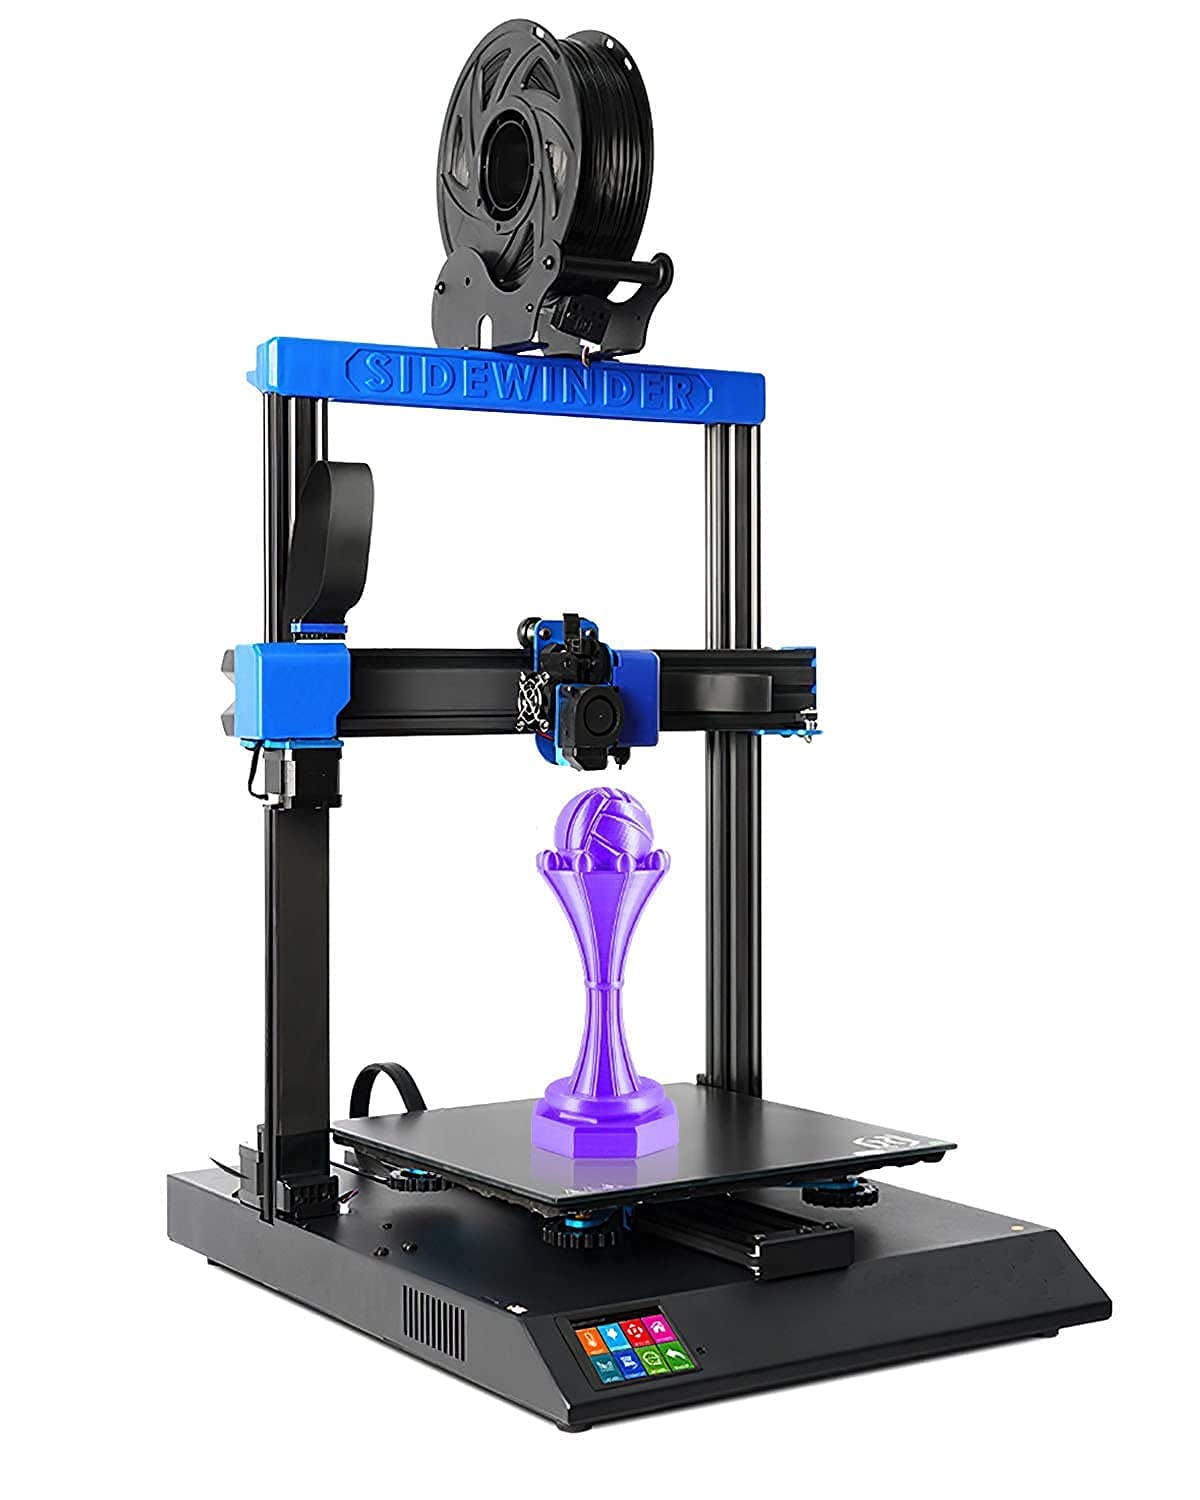 Sidewinder X2 | Geekbuying 3D Printers and Laser Engravers Sale